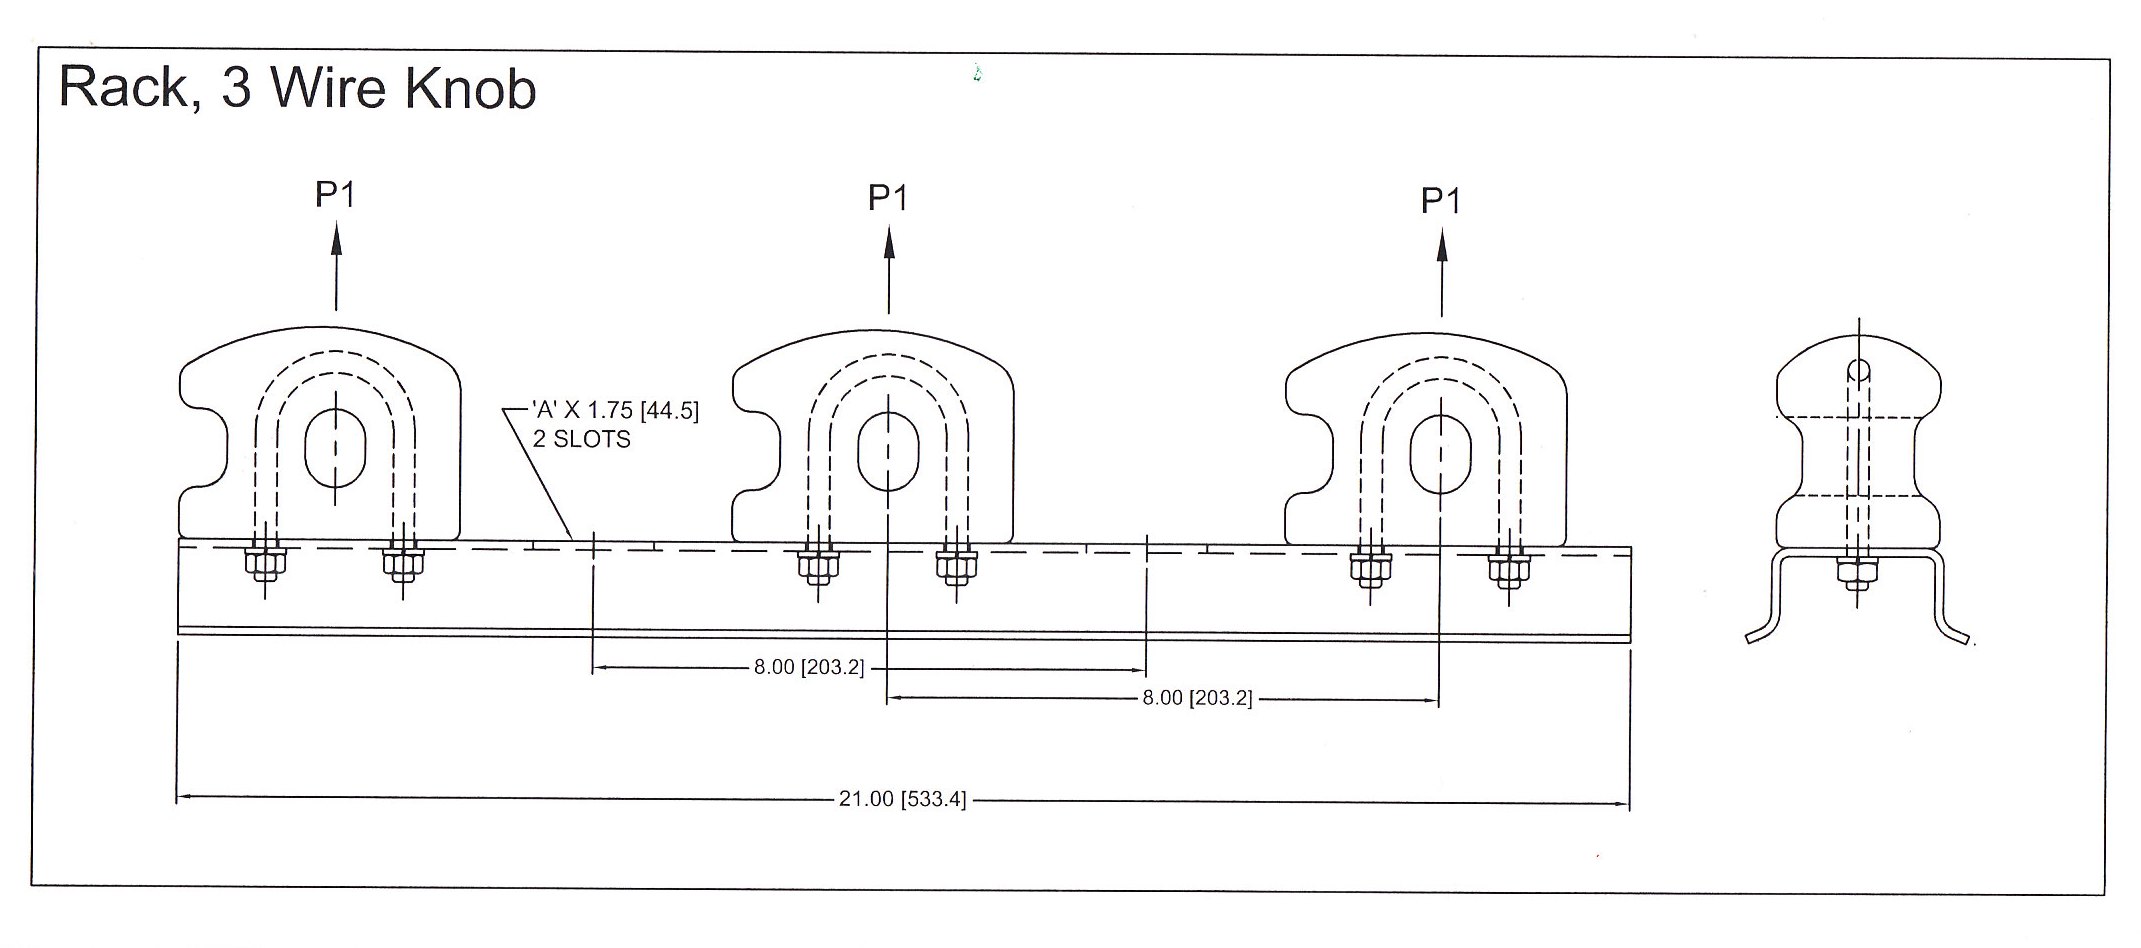 Secondary Rack, Electrical Secondary Rack(2,3,4,5 Spool)